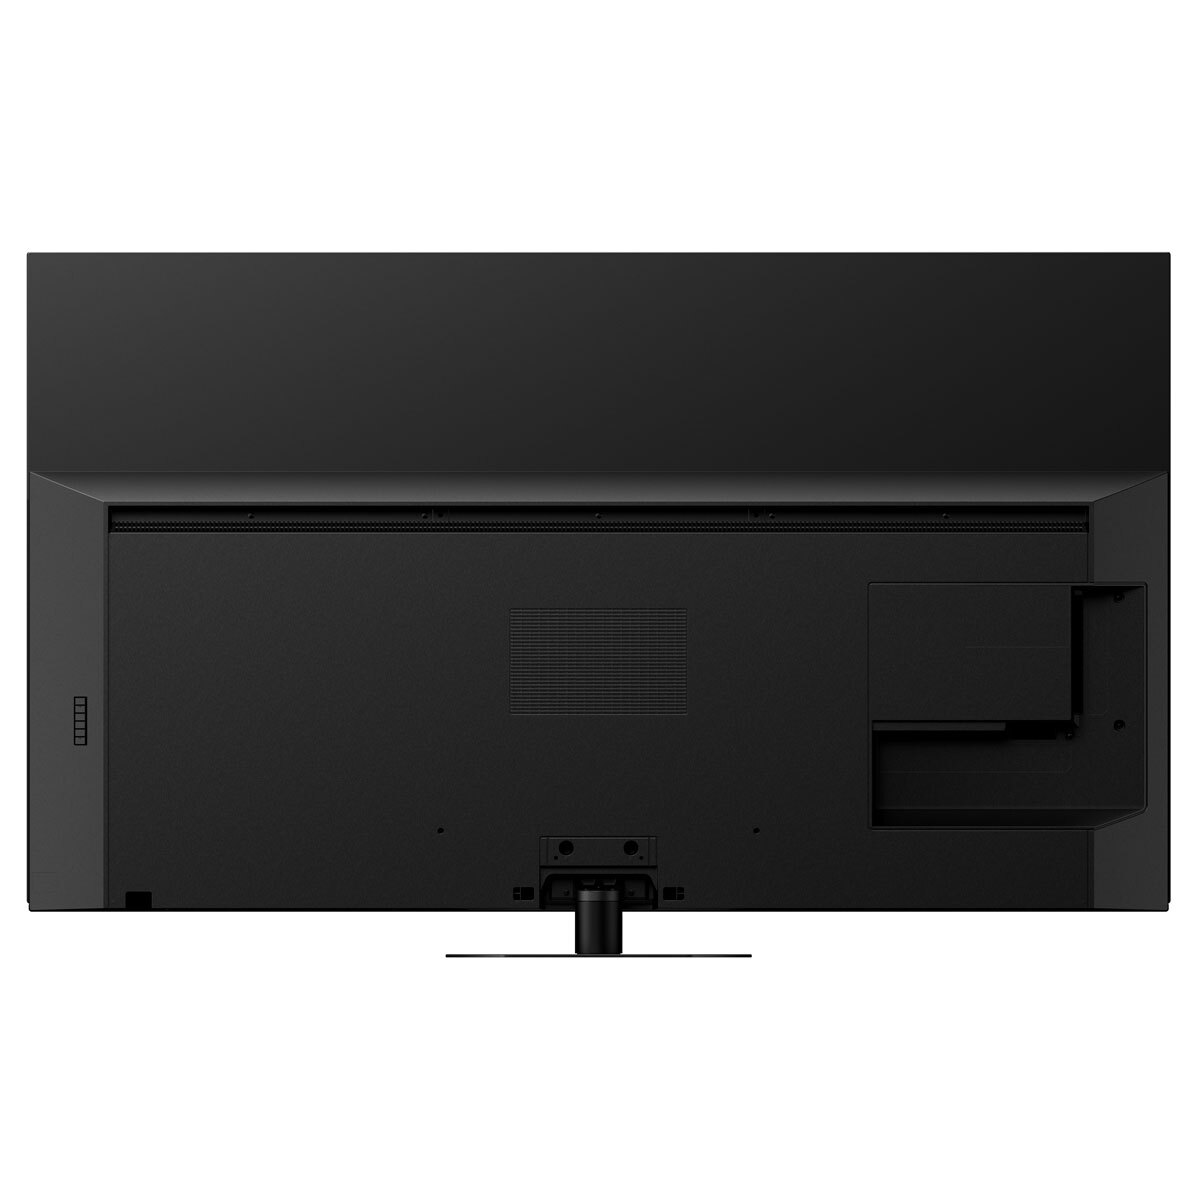 Buy Panasonic TX-55JZ980B 55 Inch OLED 4K Ultra HD Smart TV at Costco.co.uk